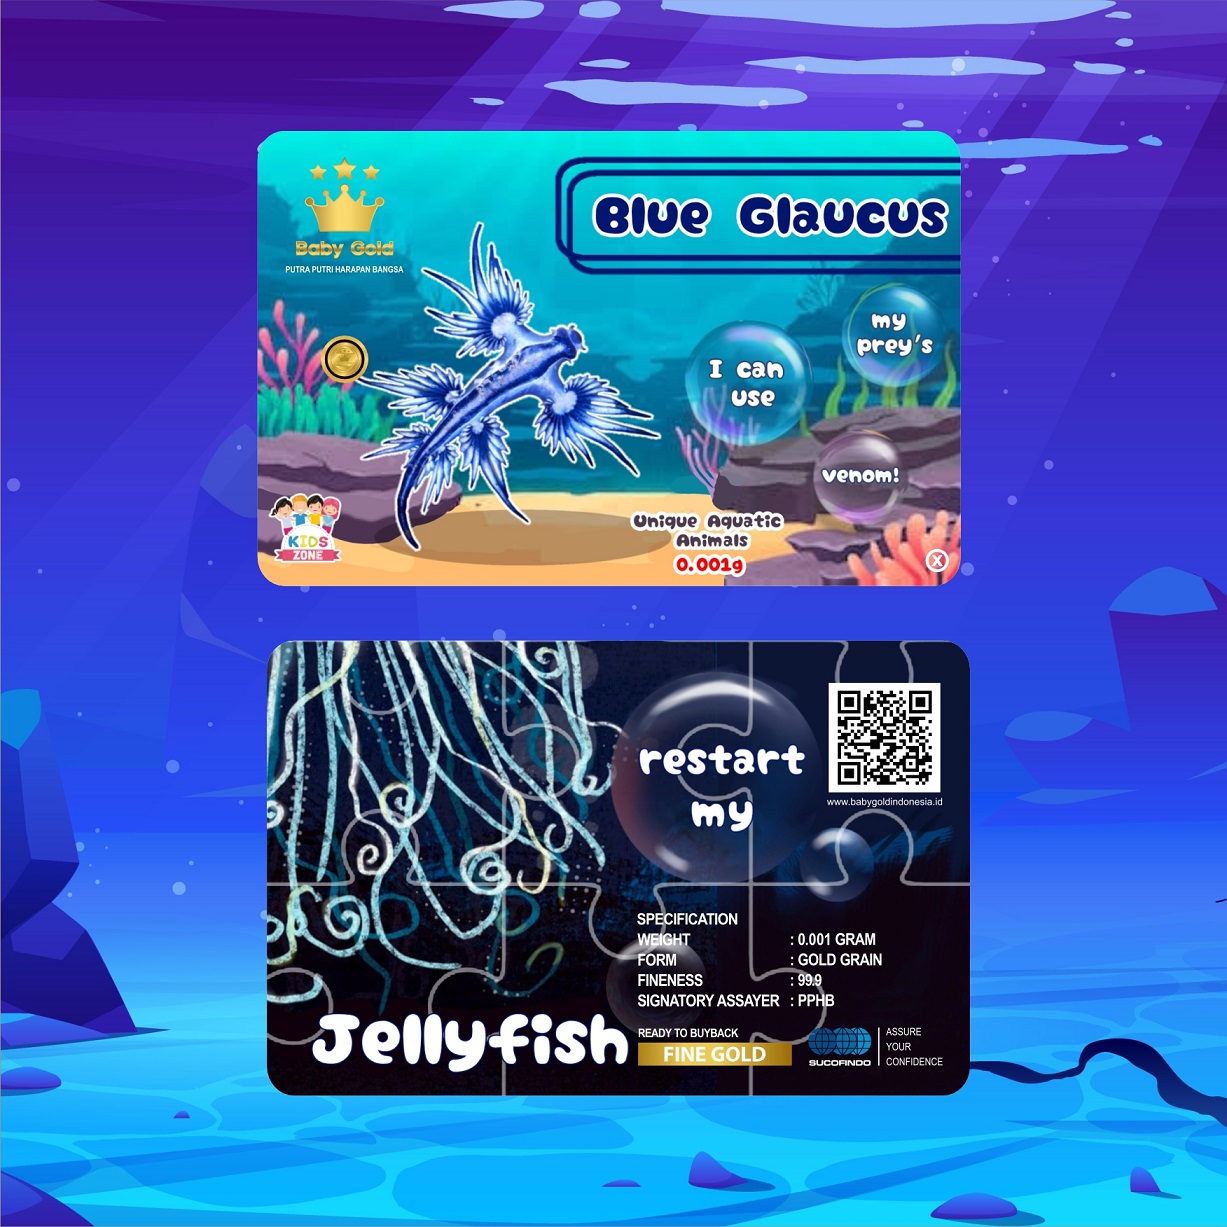 Blue Glaucus 0,001